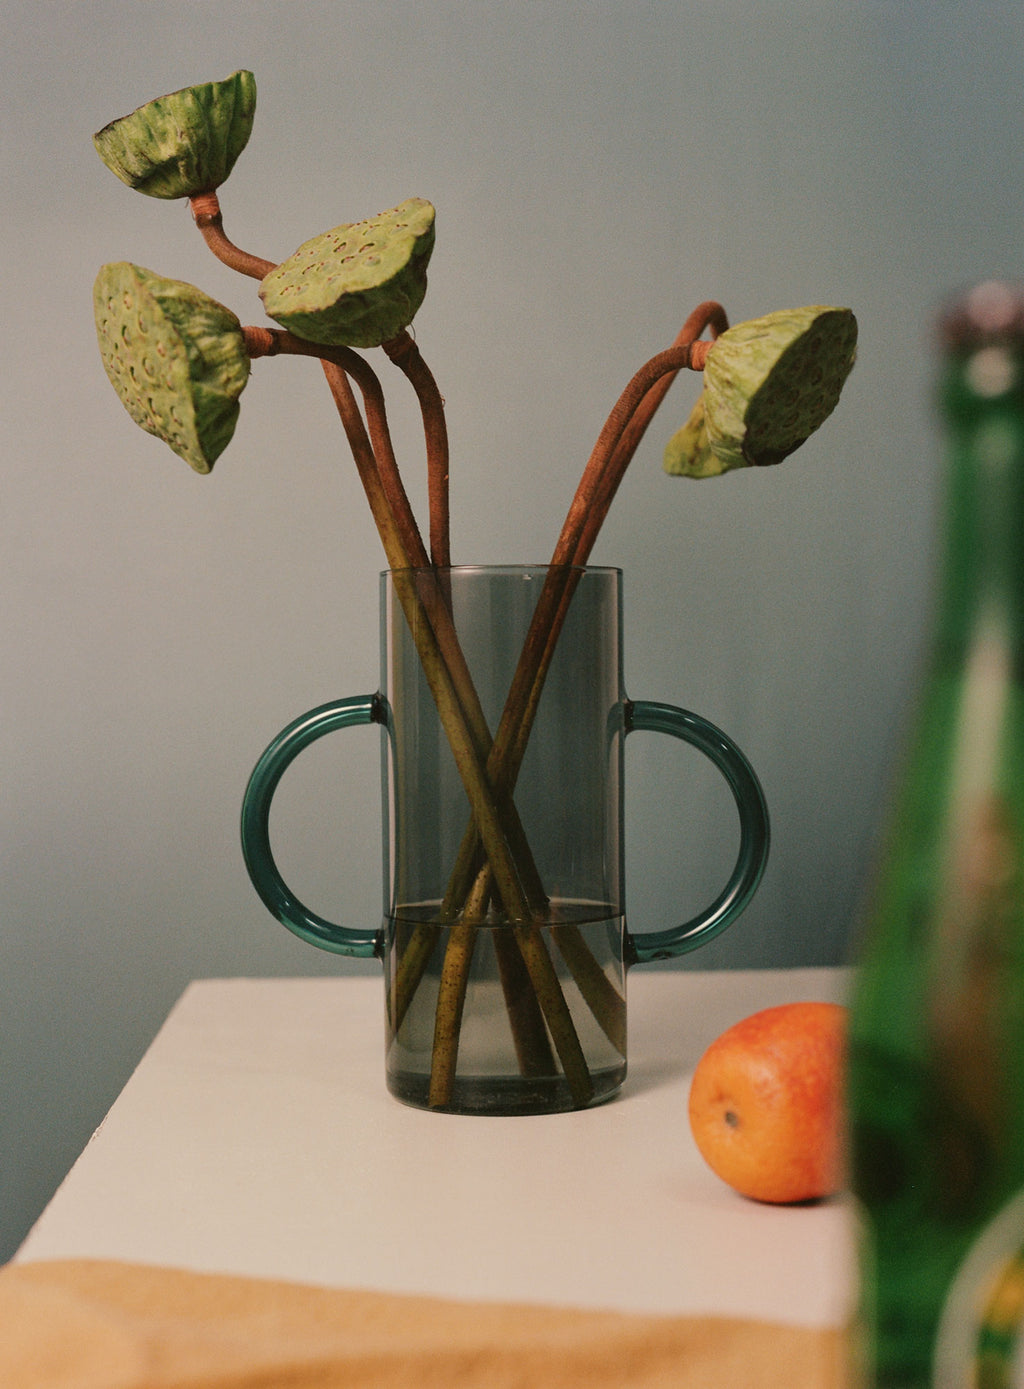 Handle Vase - Amber / Lilac